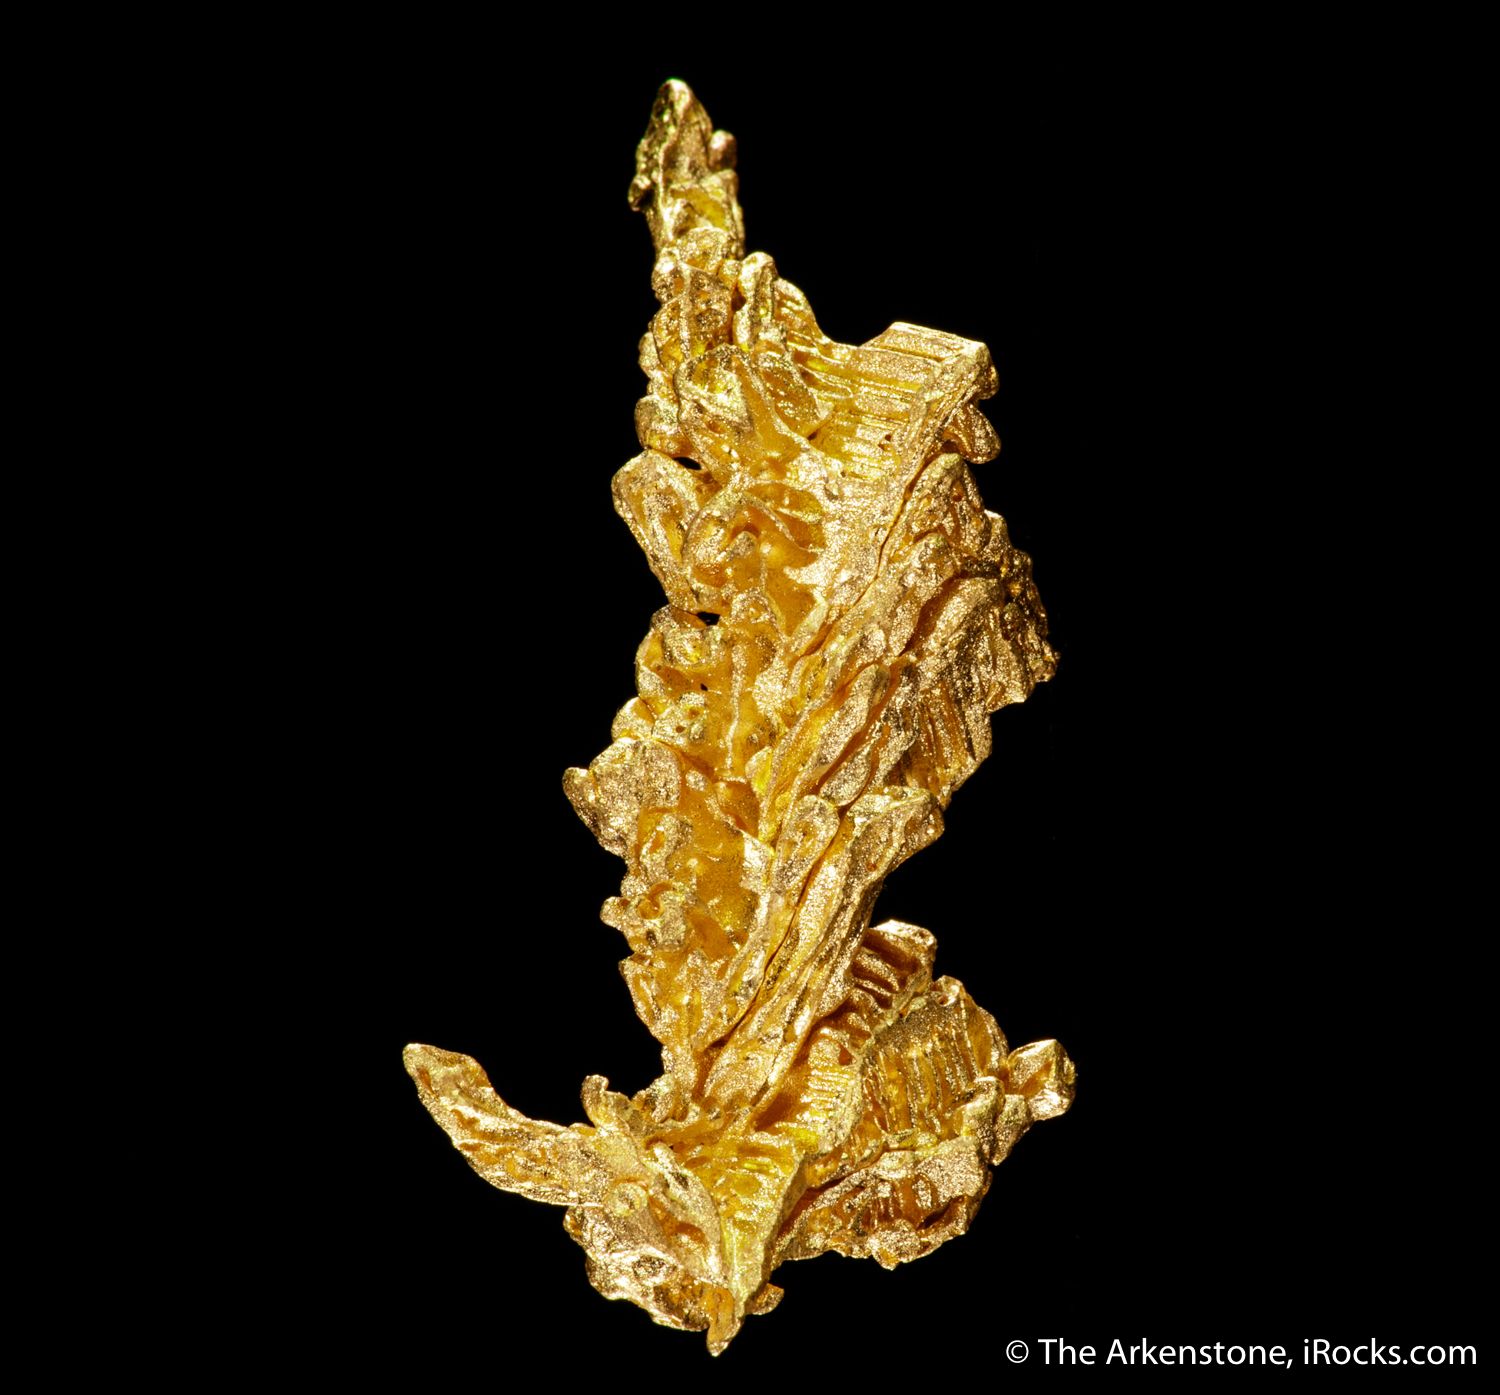 Gold - GOLD21-13 - Pontes e Lacerda - Brazil Mineral Specimen